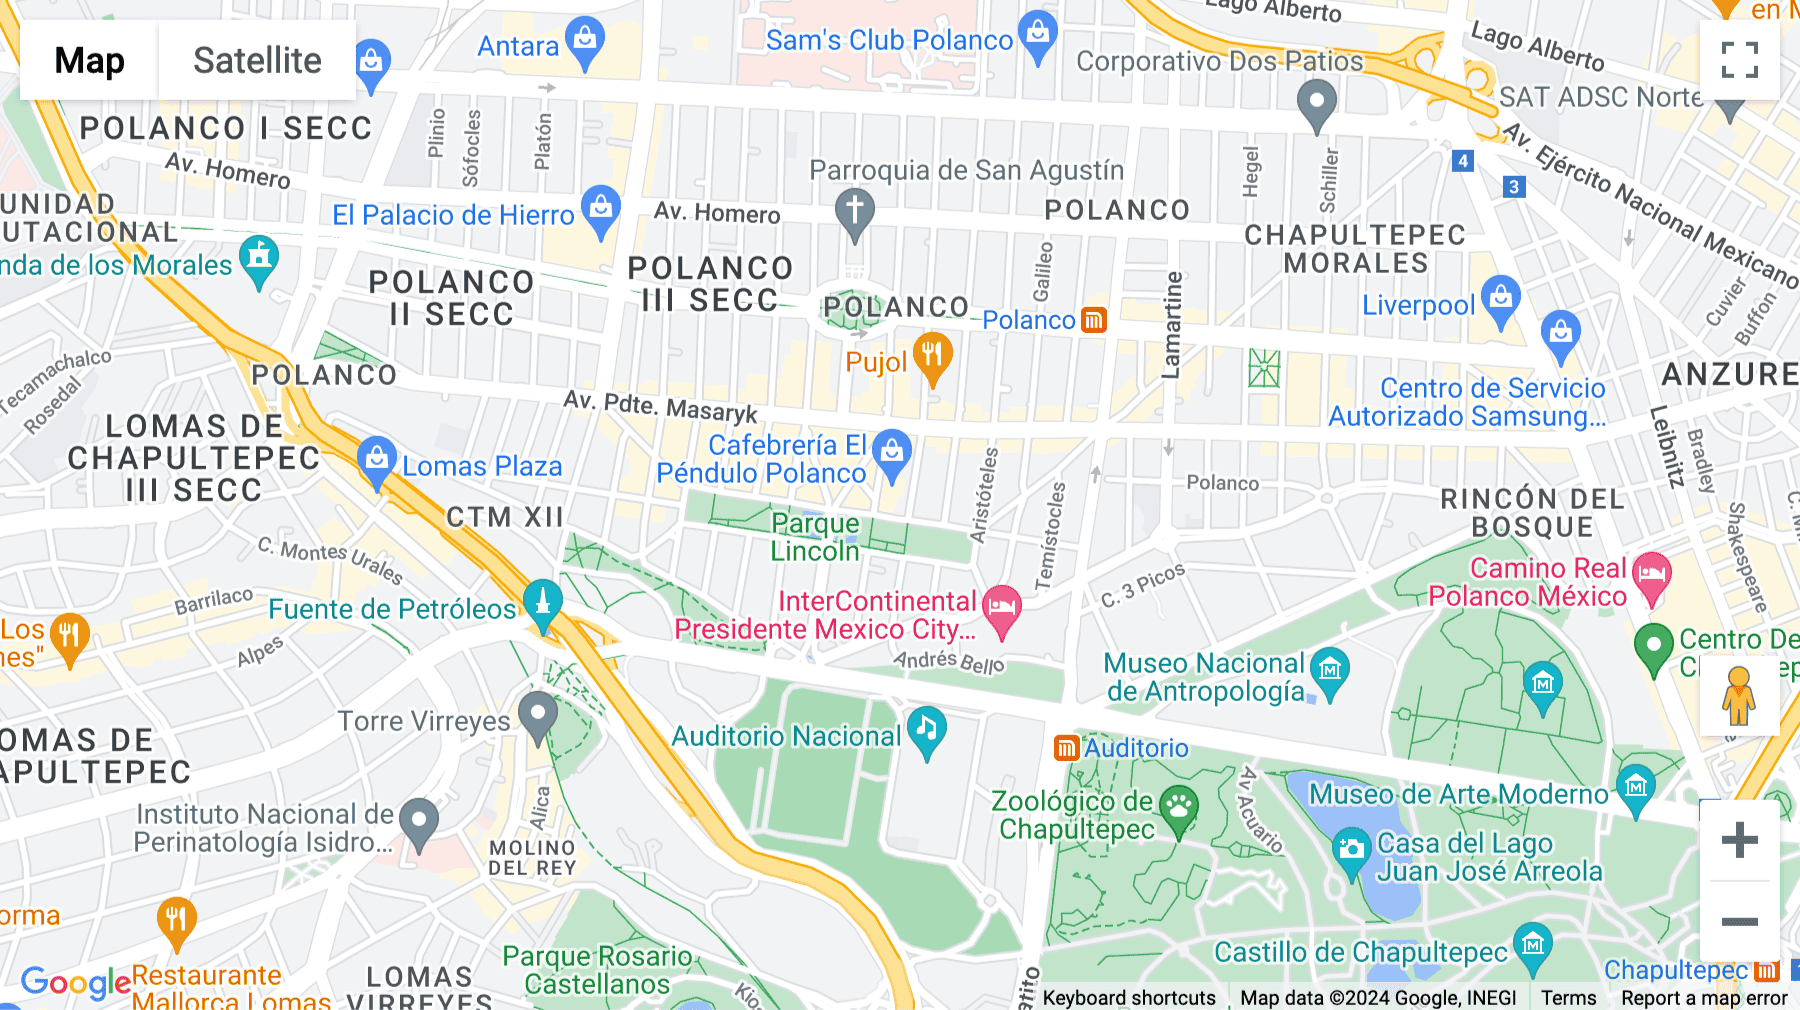 Click for interative map of Avenue Emilio Castelar 75, Polanco IV Secc, Miguel Hidalgo, Mexico City